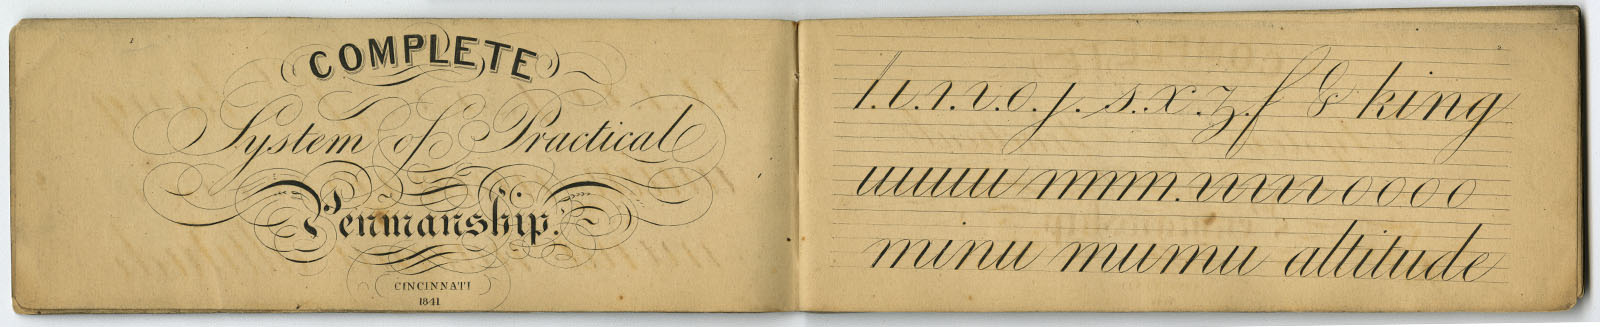 Complete System of Practical Penmanship (Cincinnati, 1841).